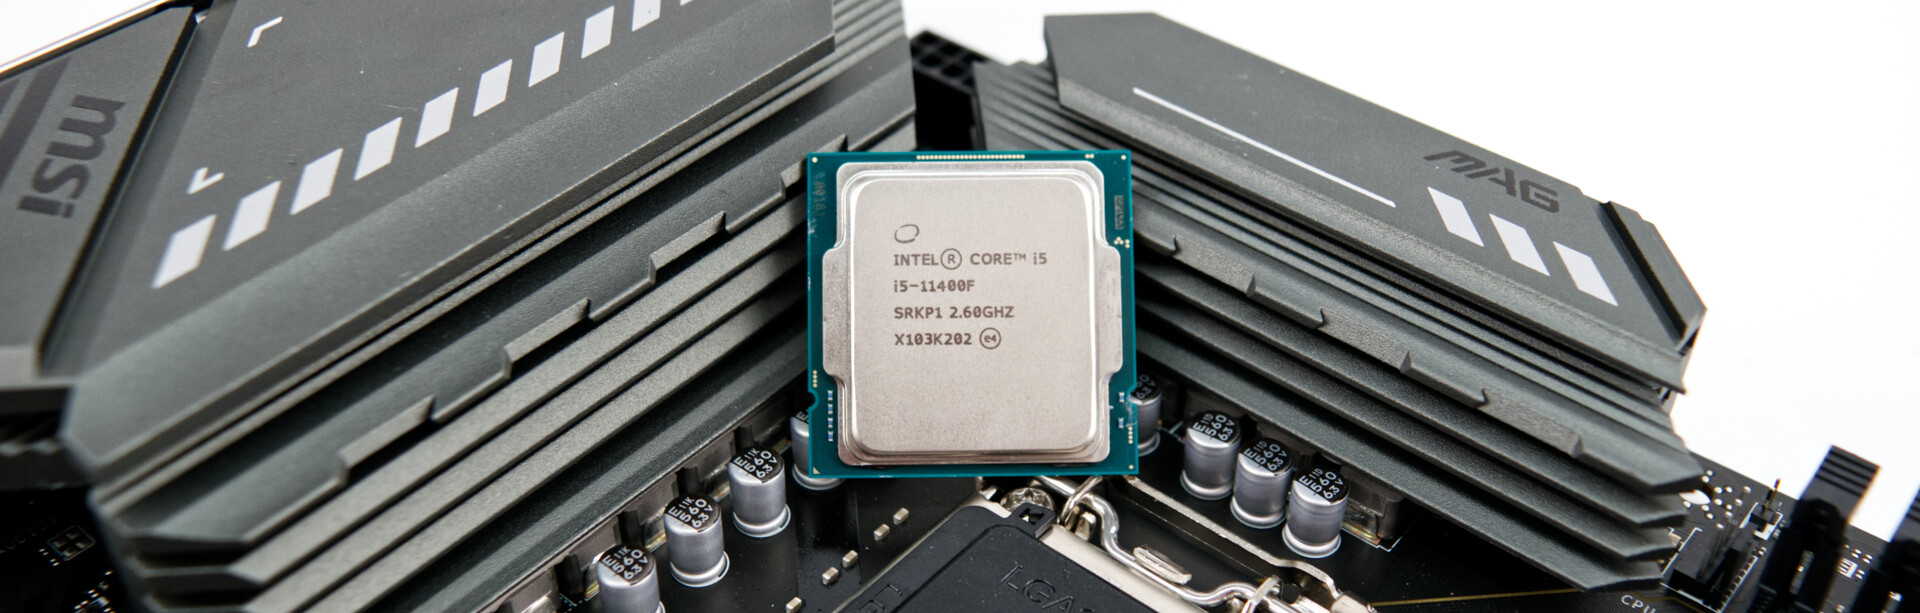 Intel Core i5-11400F desktop processor - NotebookCheck.net Reviews